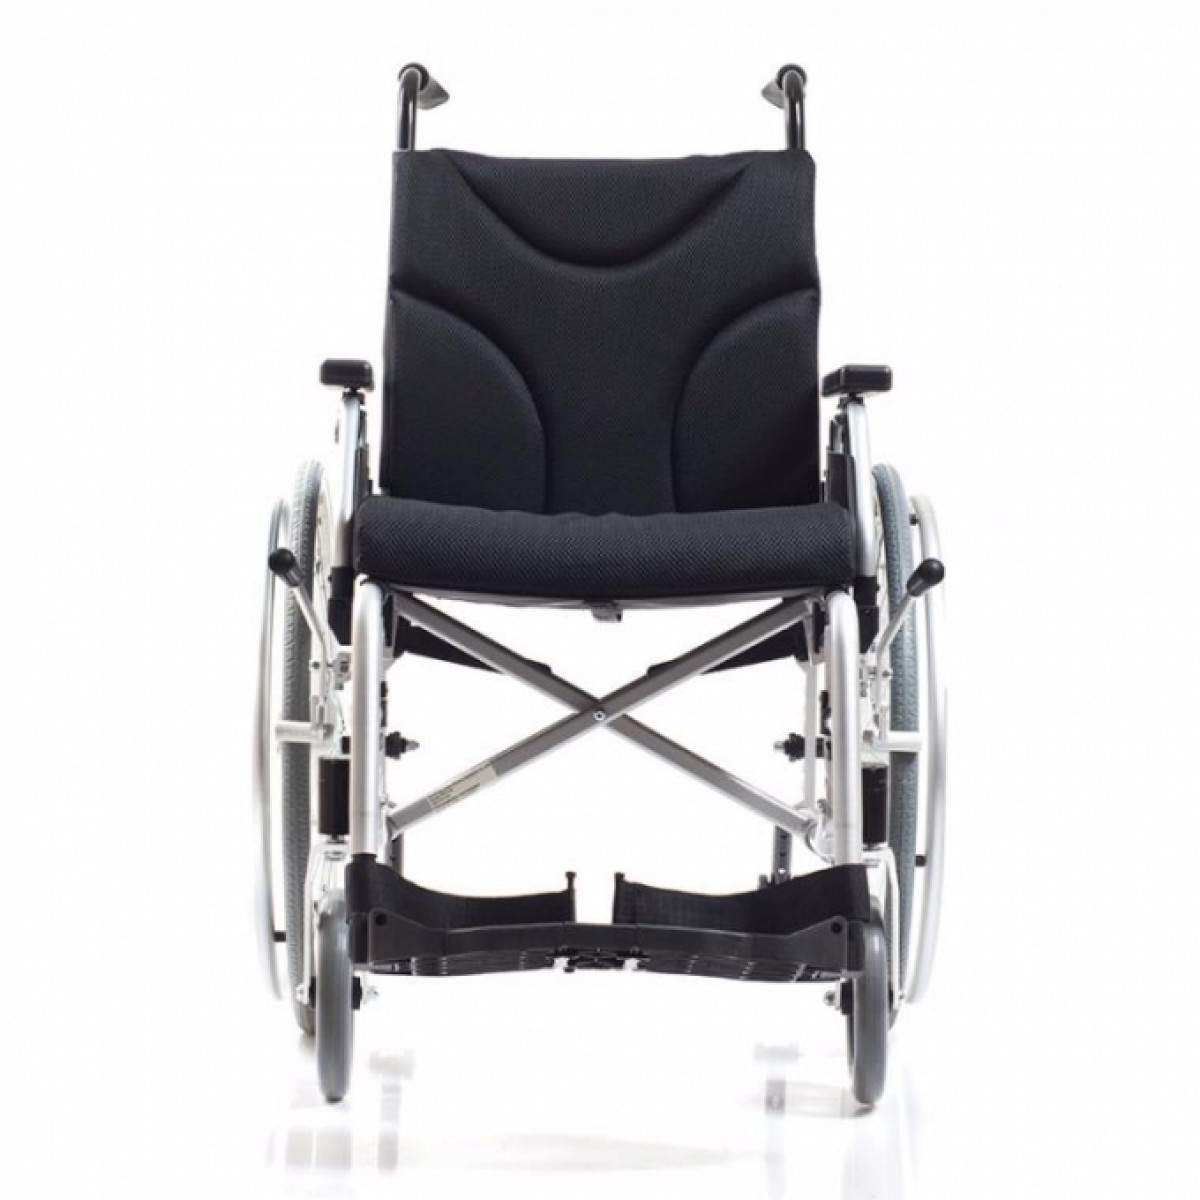 Инвалидная коляска ORTONICA TREND 70 (Ортоника Трэнд) фото 2